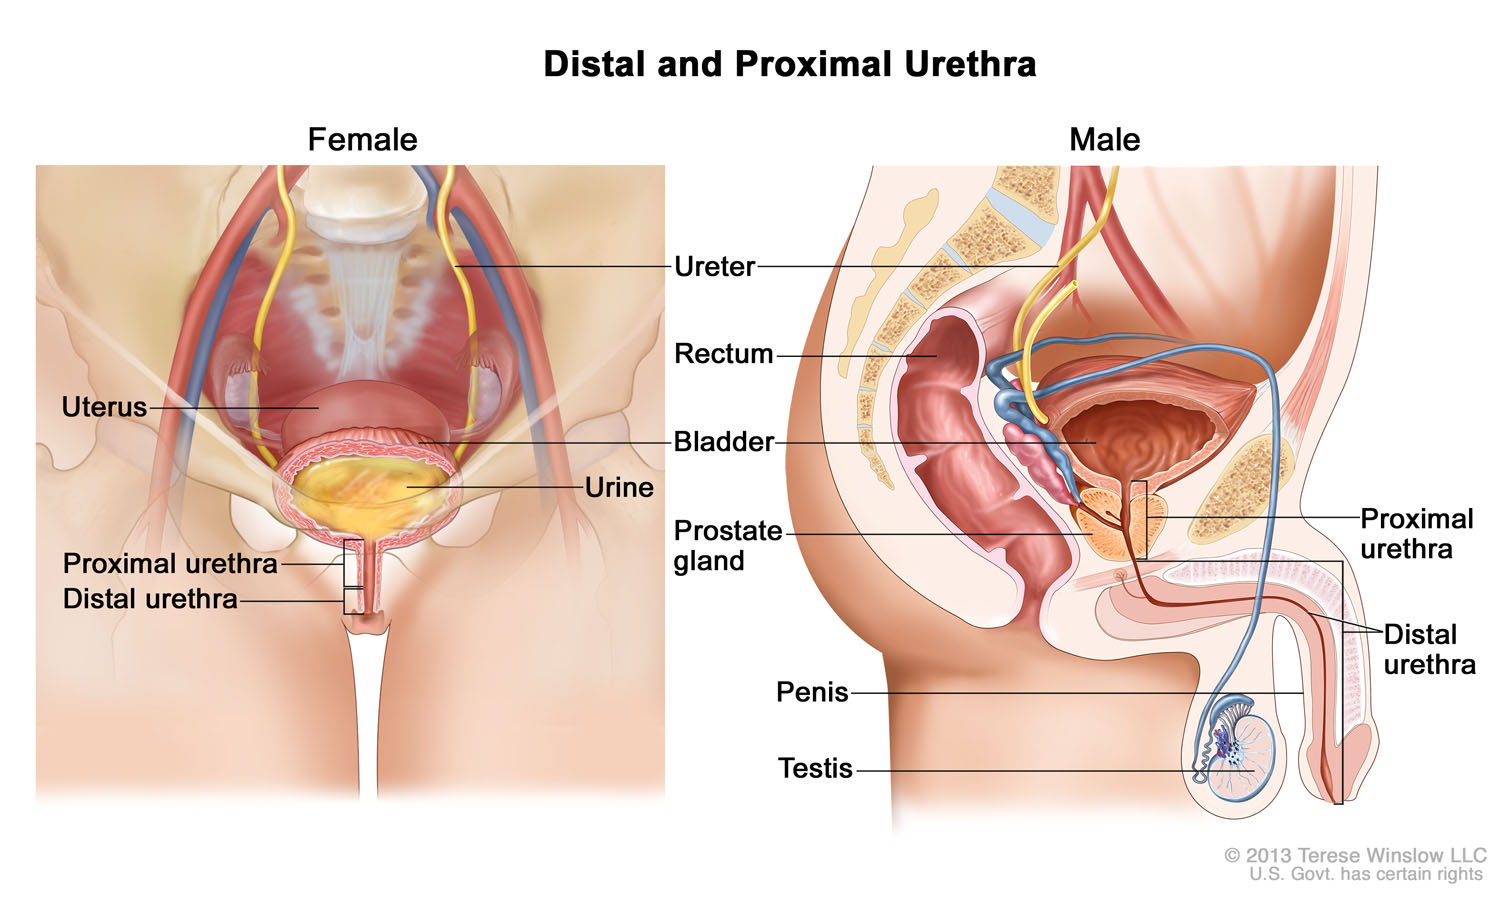 Distal and Proximal Urethra